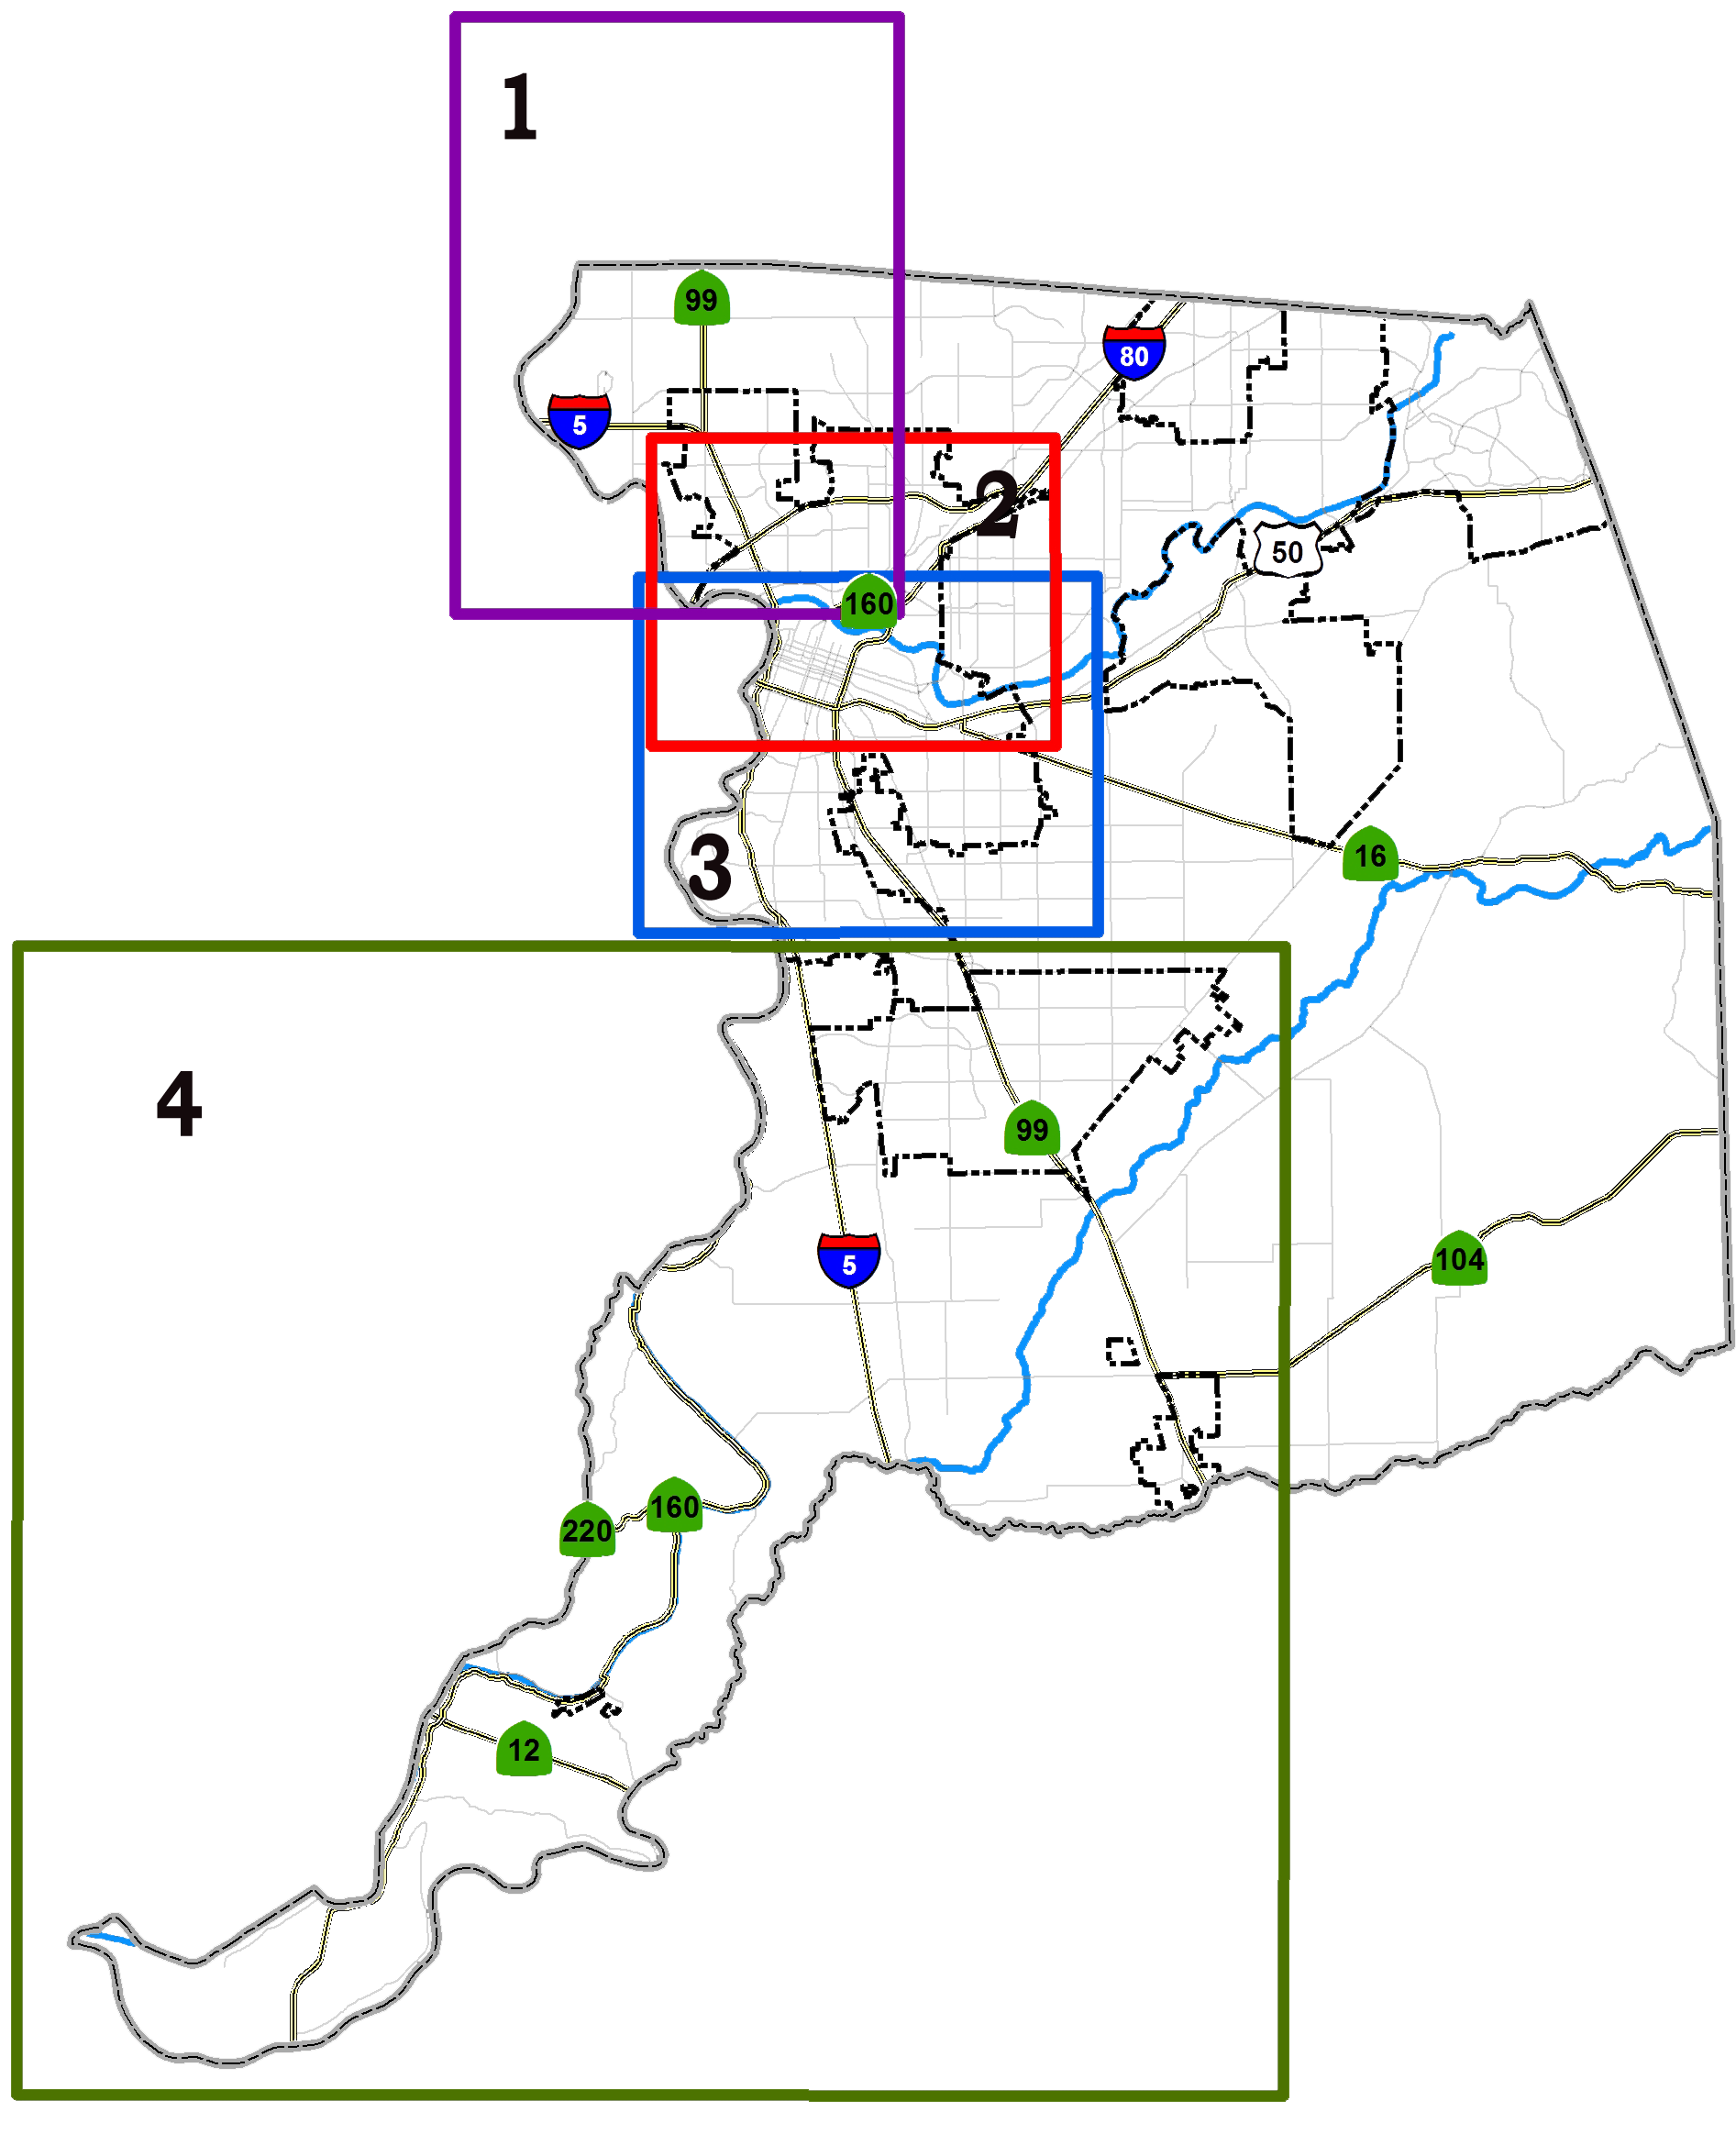 Maps Flood Scenarios and Evacuation Routes